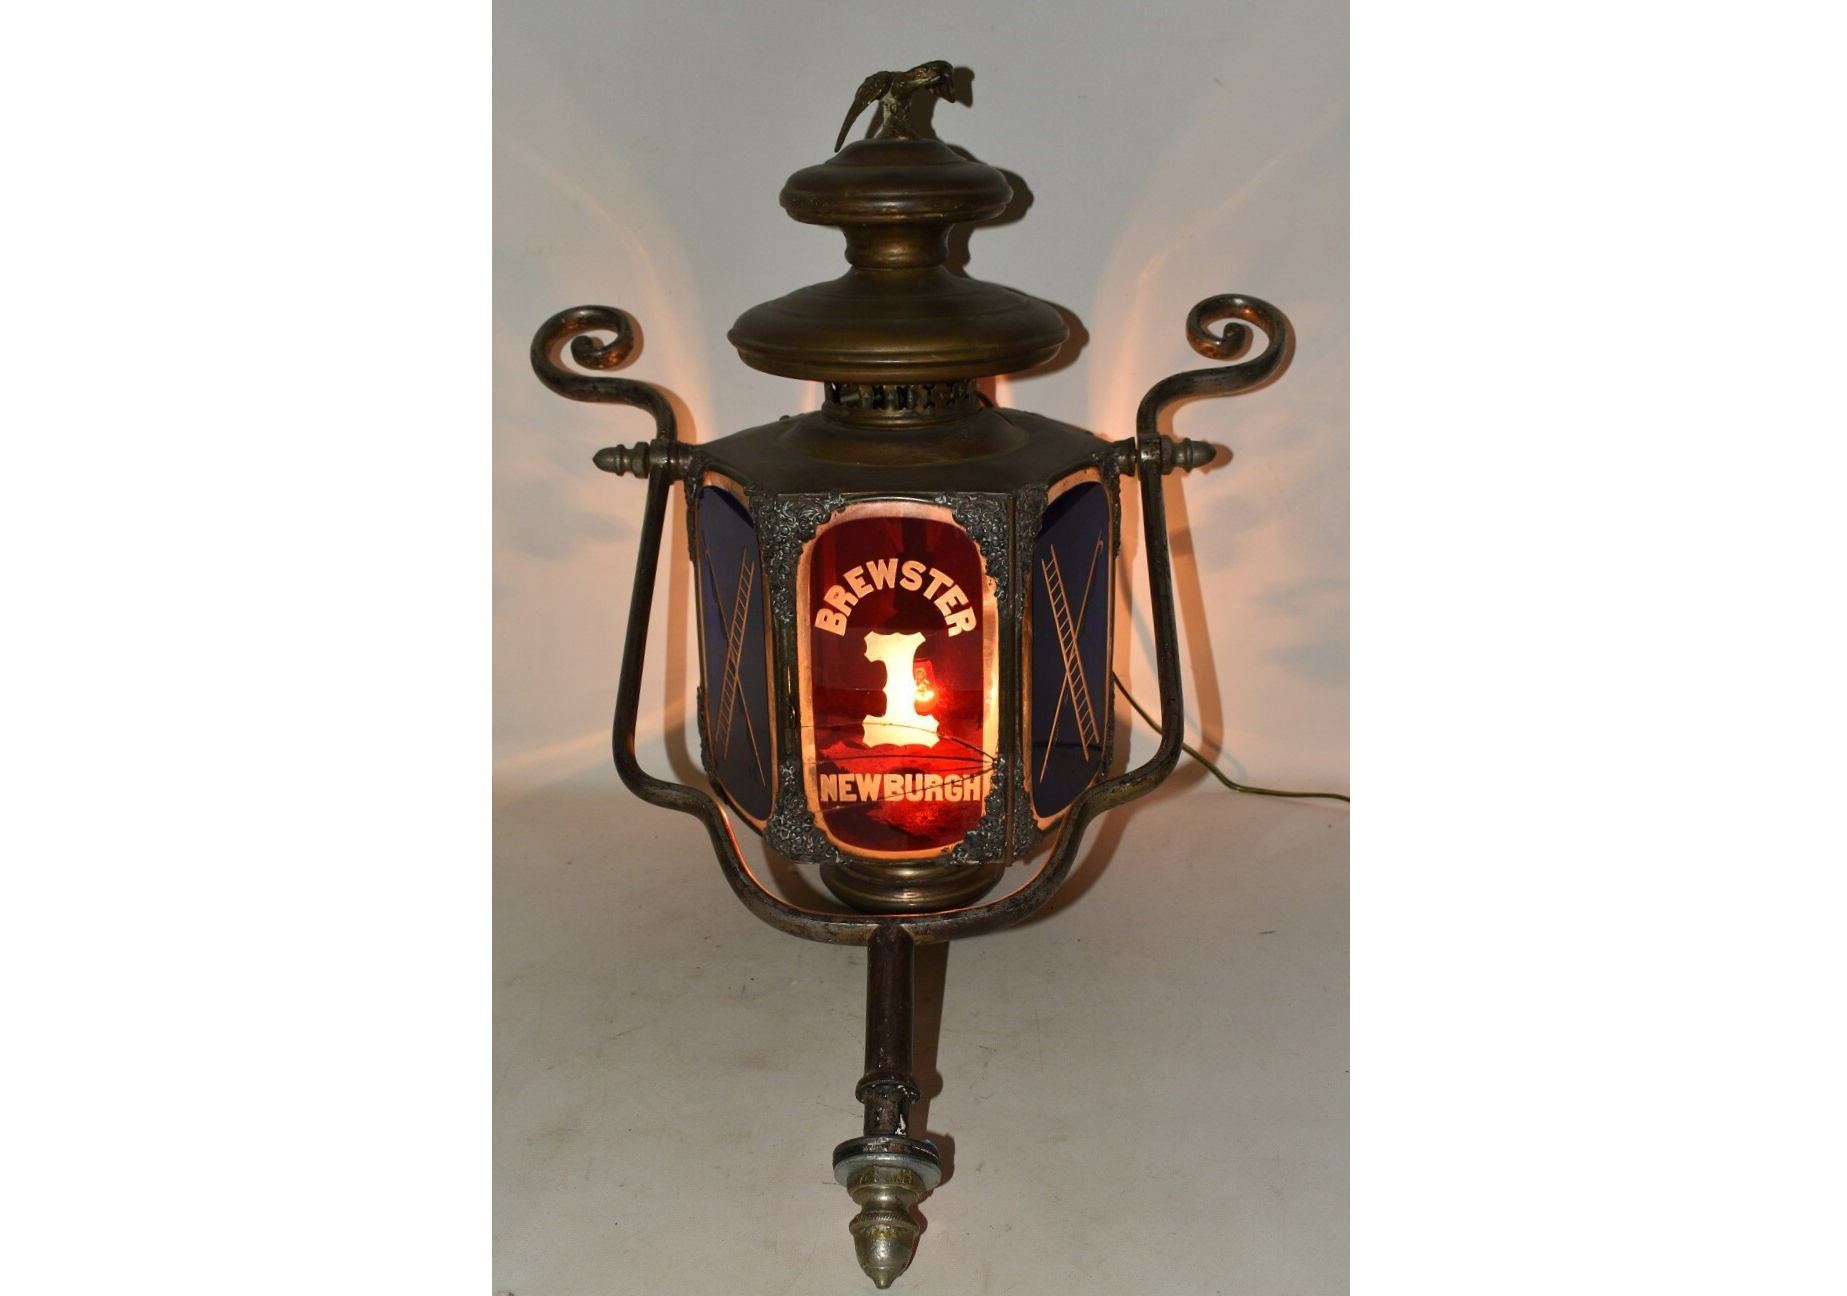 Newburgh Brewster Fire Department engraved lantern, estimated at $25-$1,000